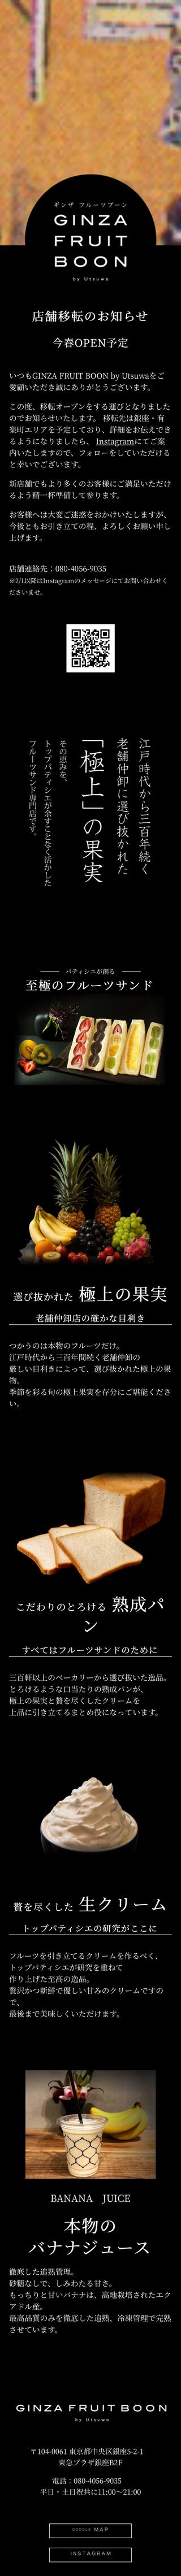 GINZA FRUIT BOON by Utsuwaのスマートフォン画面